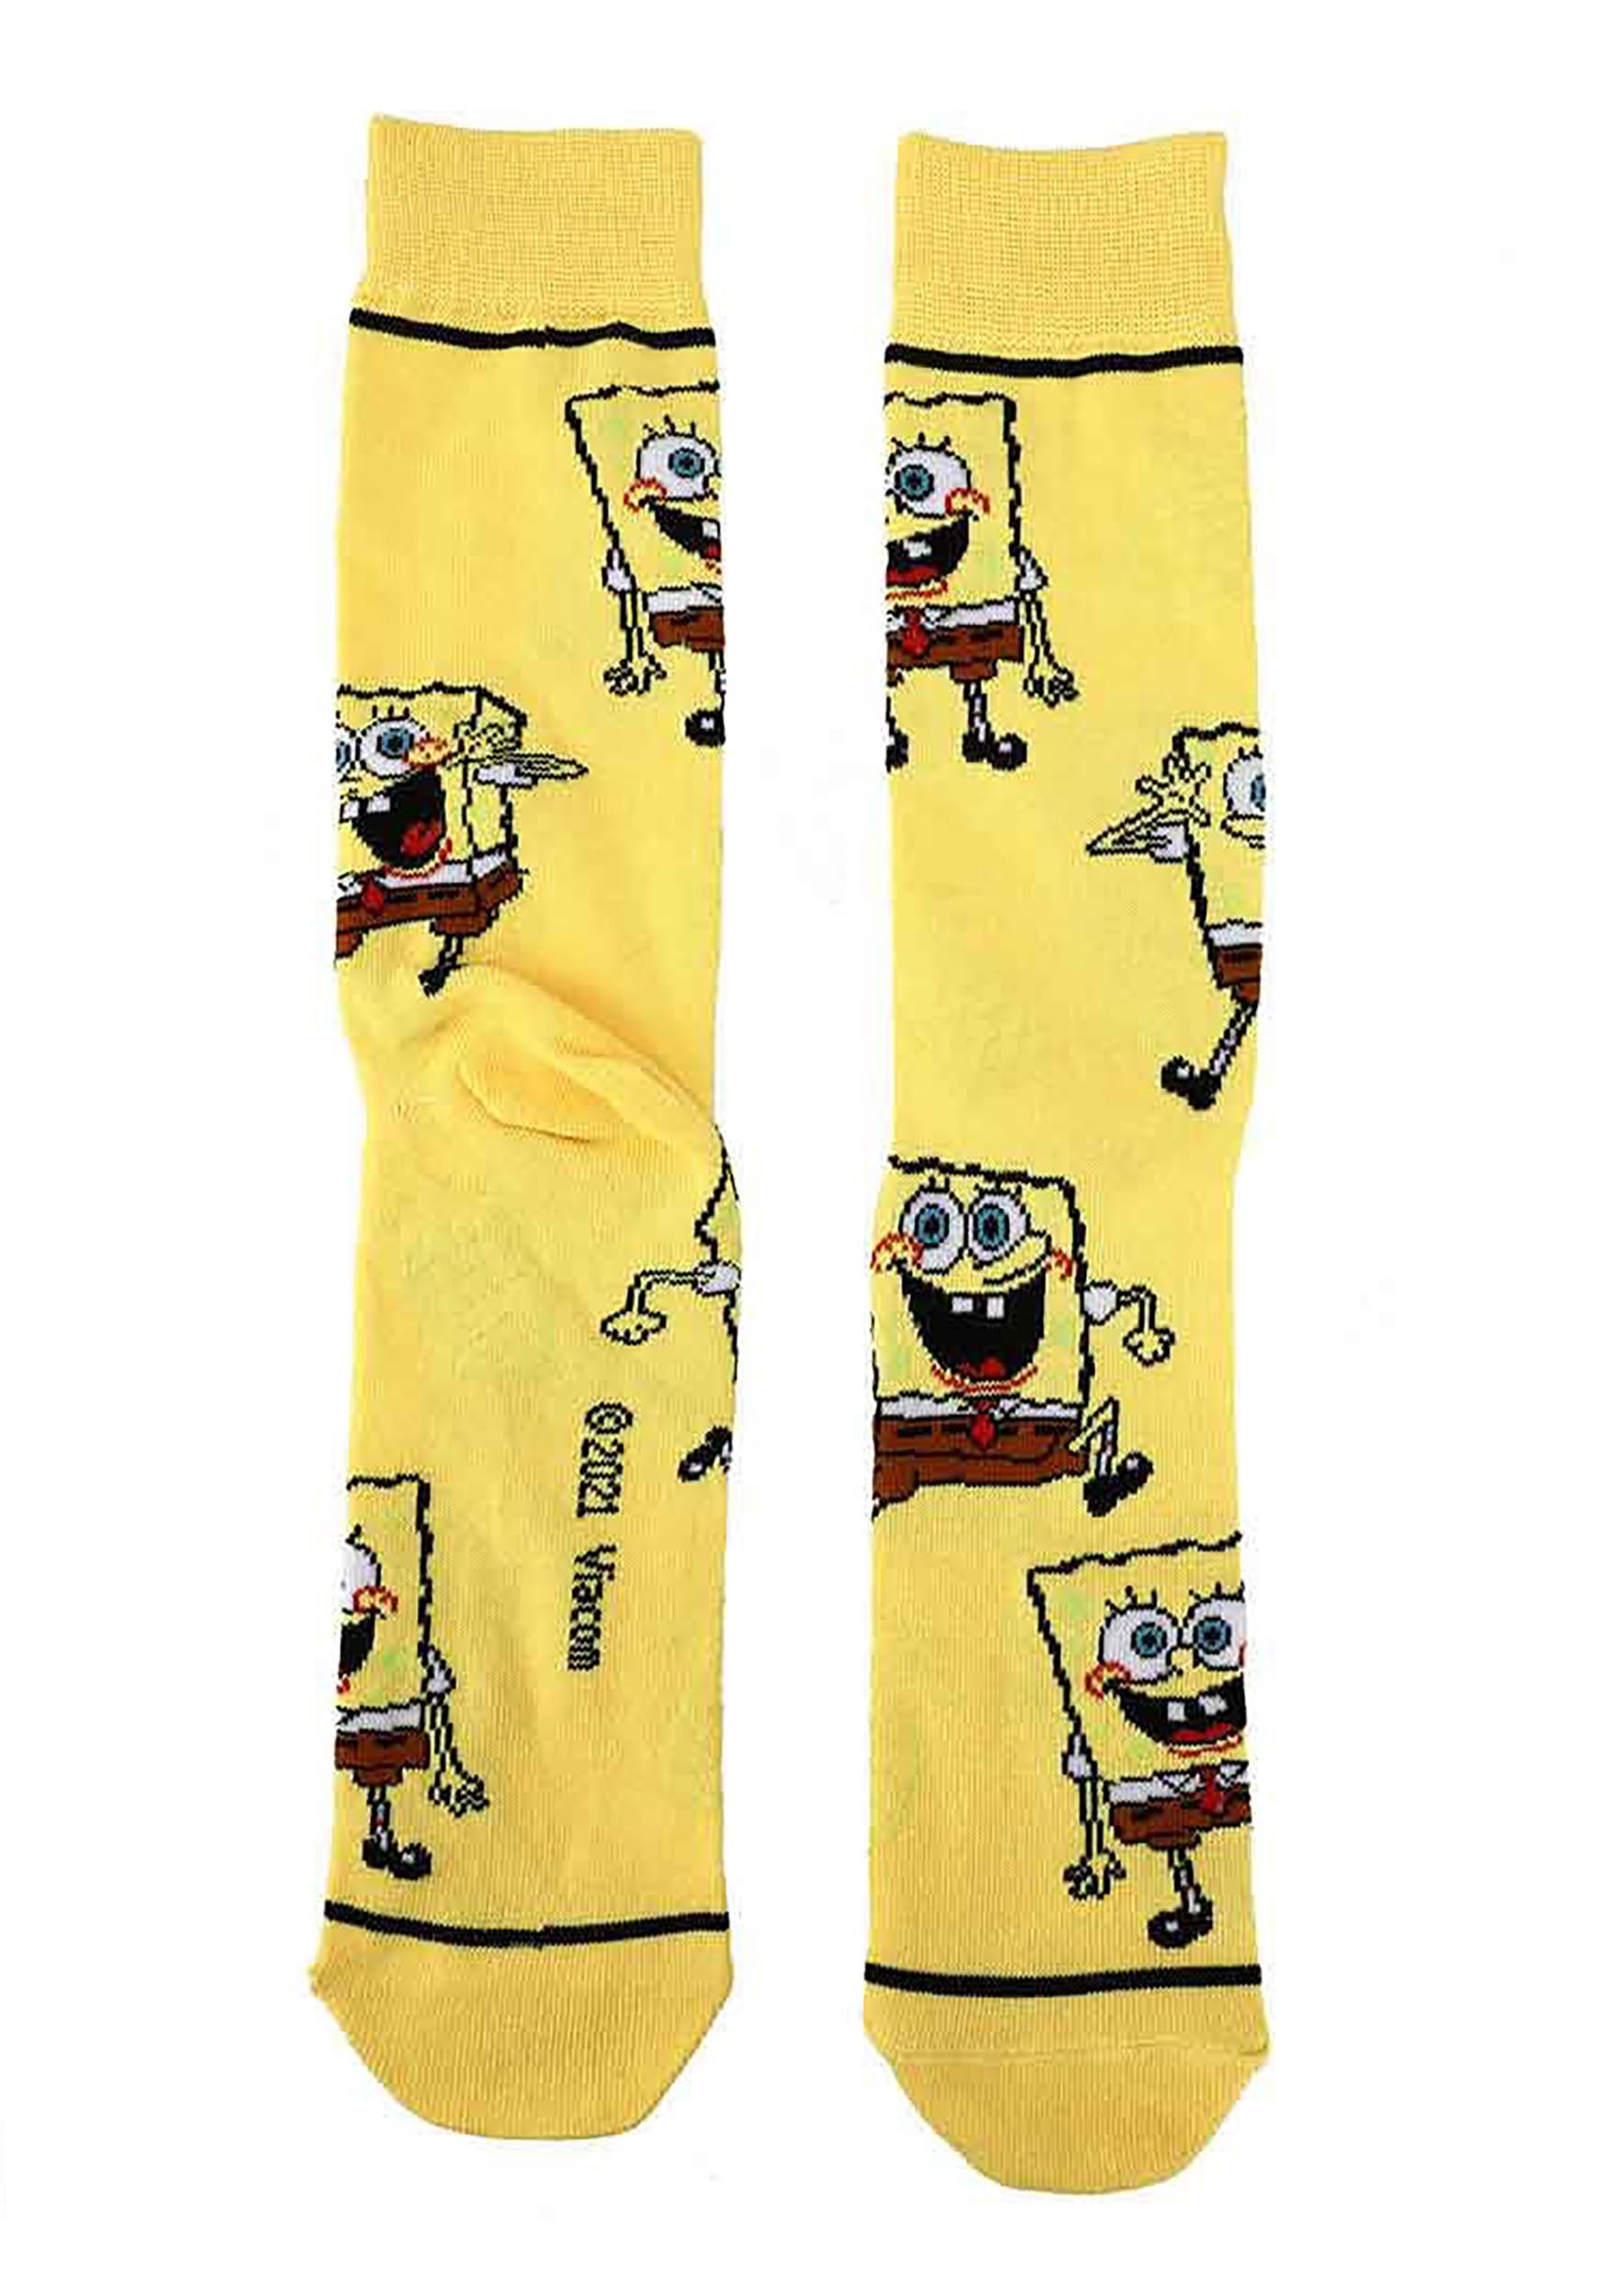 Spongebob And Patrick Adult Crew Socks 